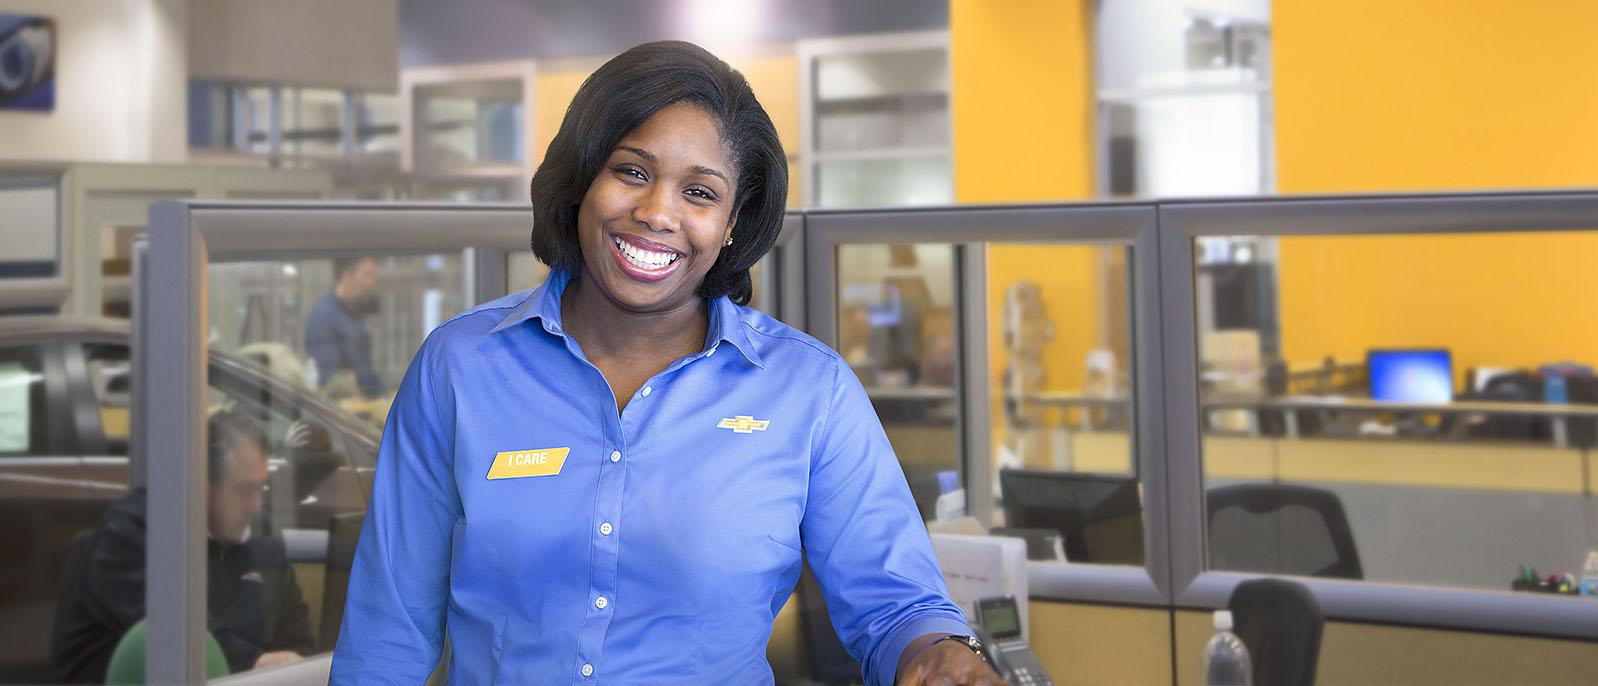 Smiling woman, Chevrolet dealership employee